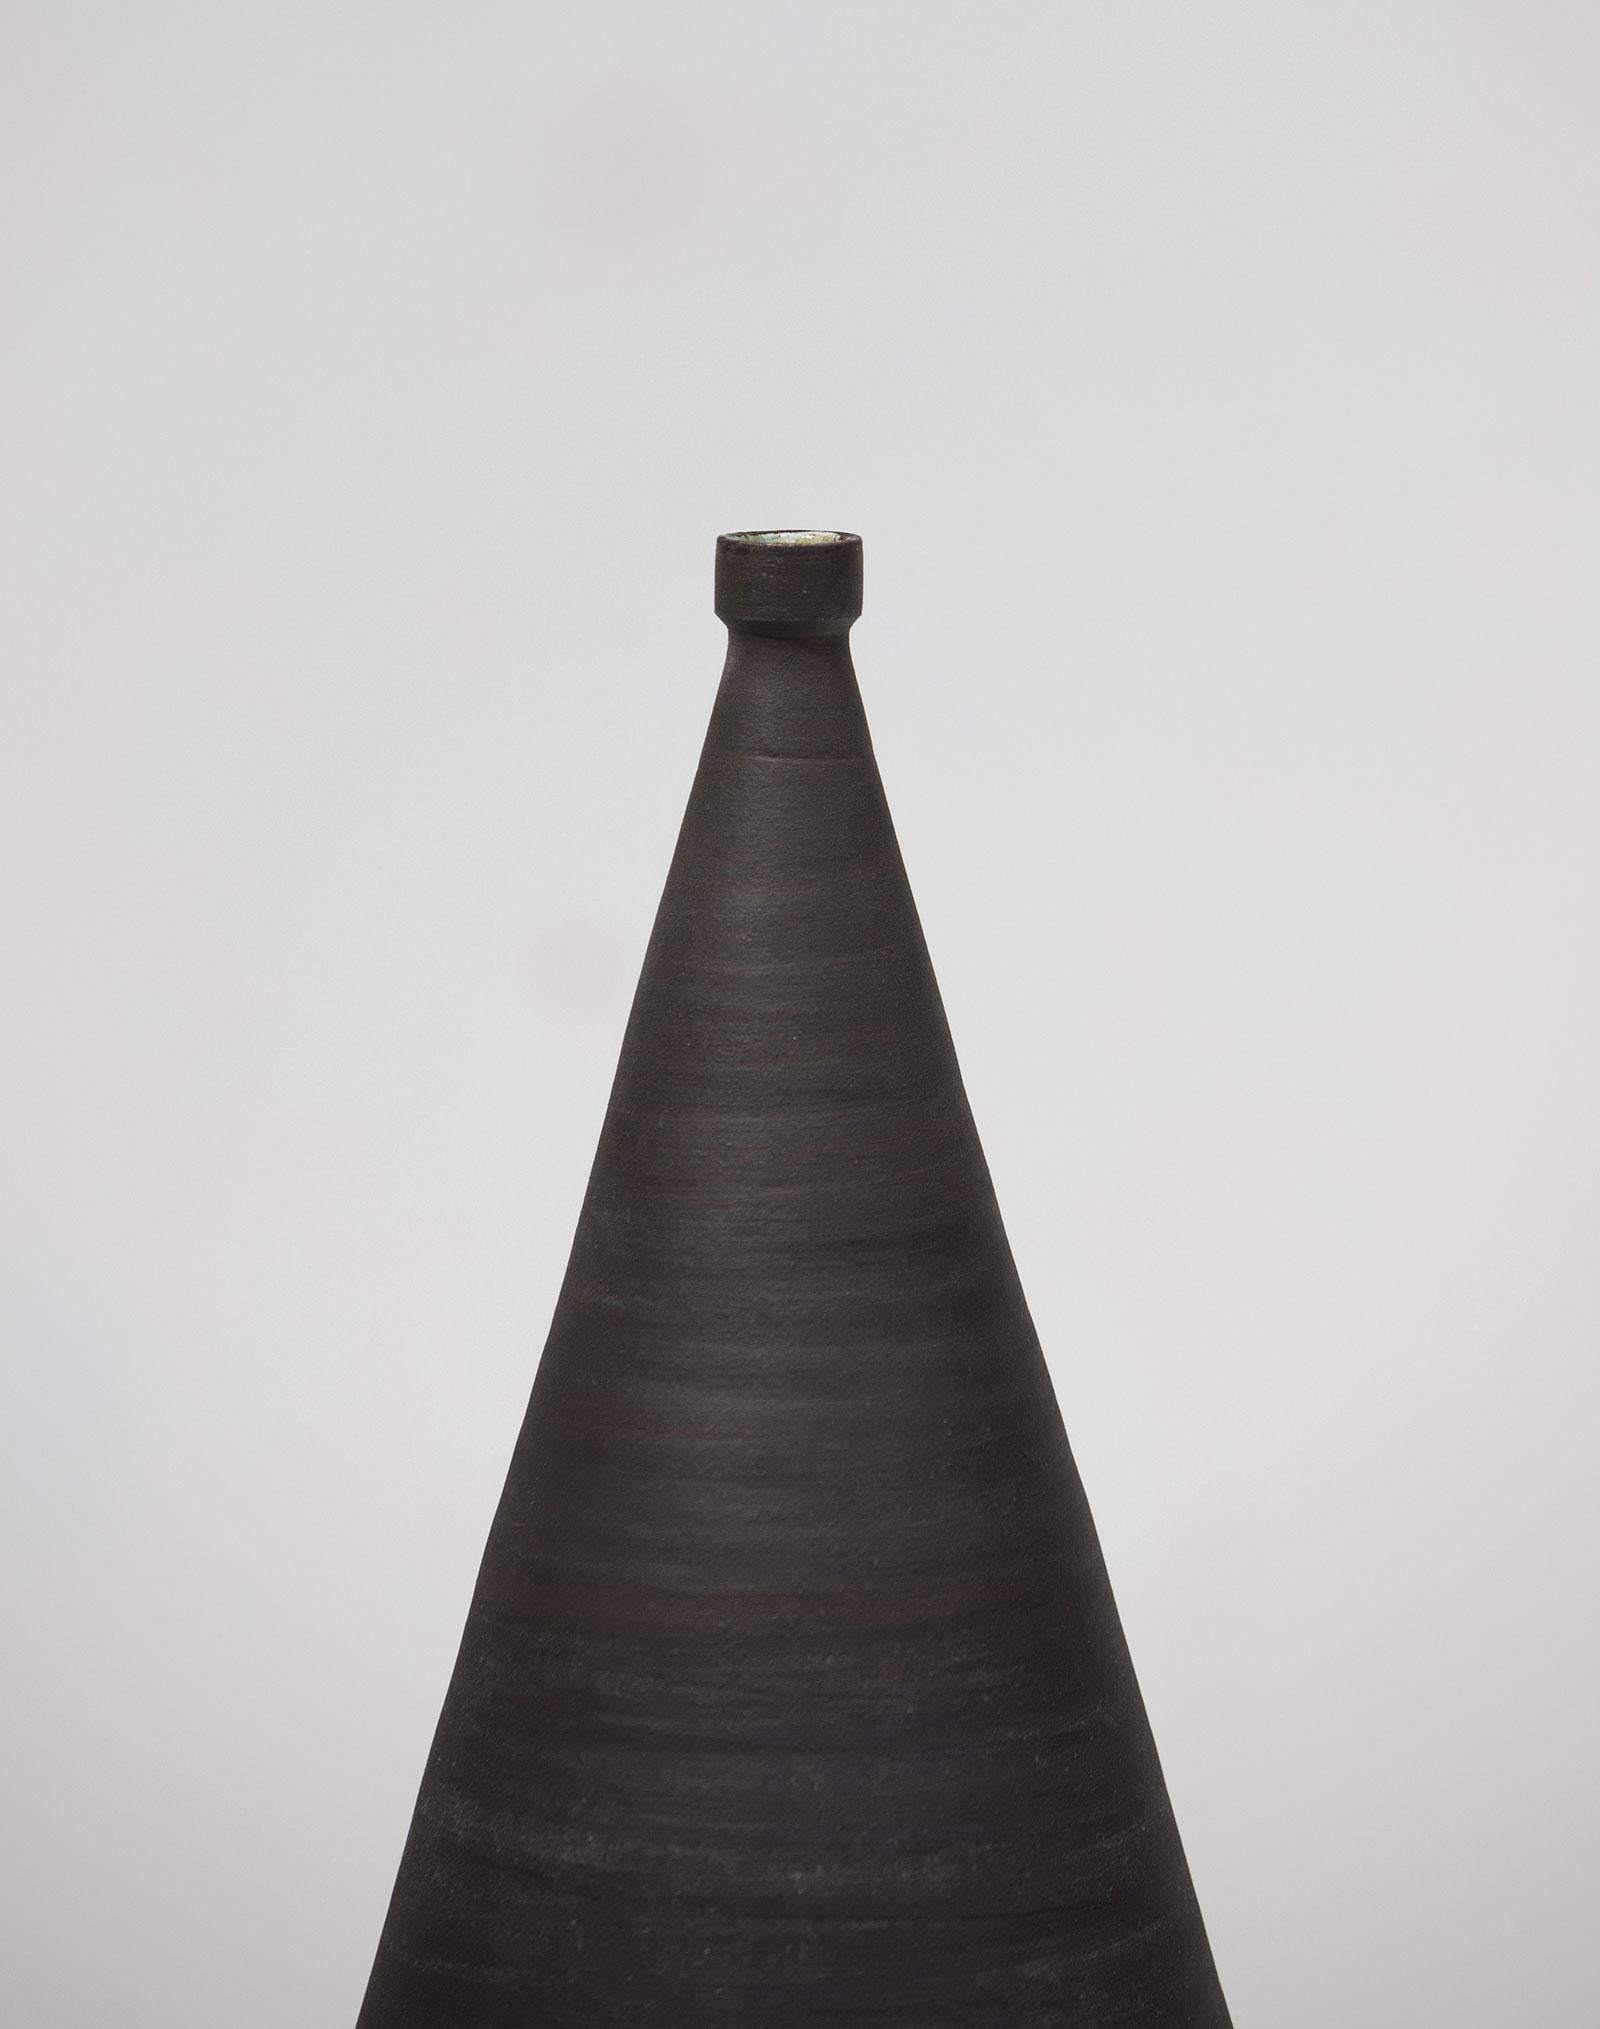 Glazed Signed Ceramic Vase, 1963 with Black Glaze Finish For Sale